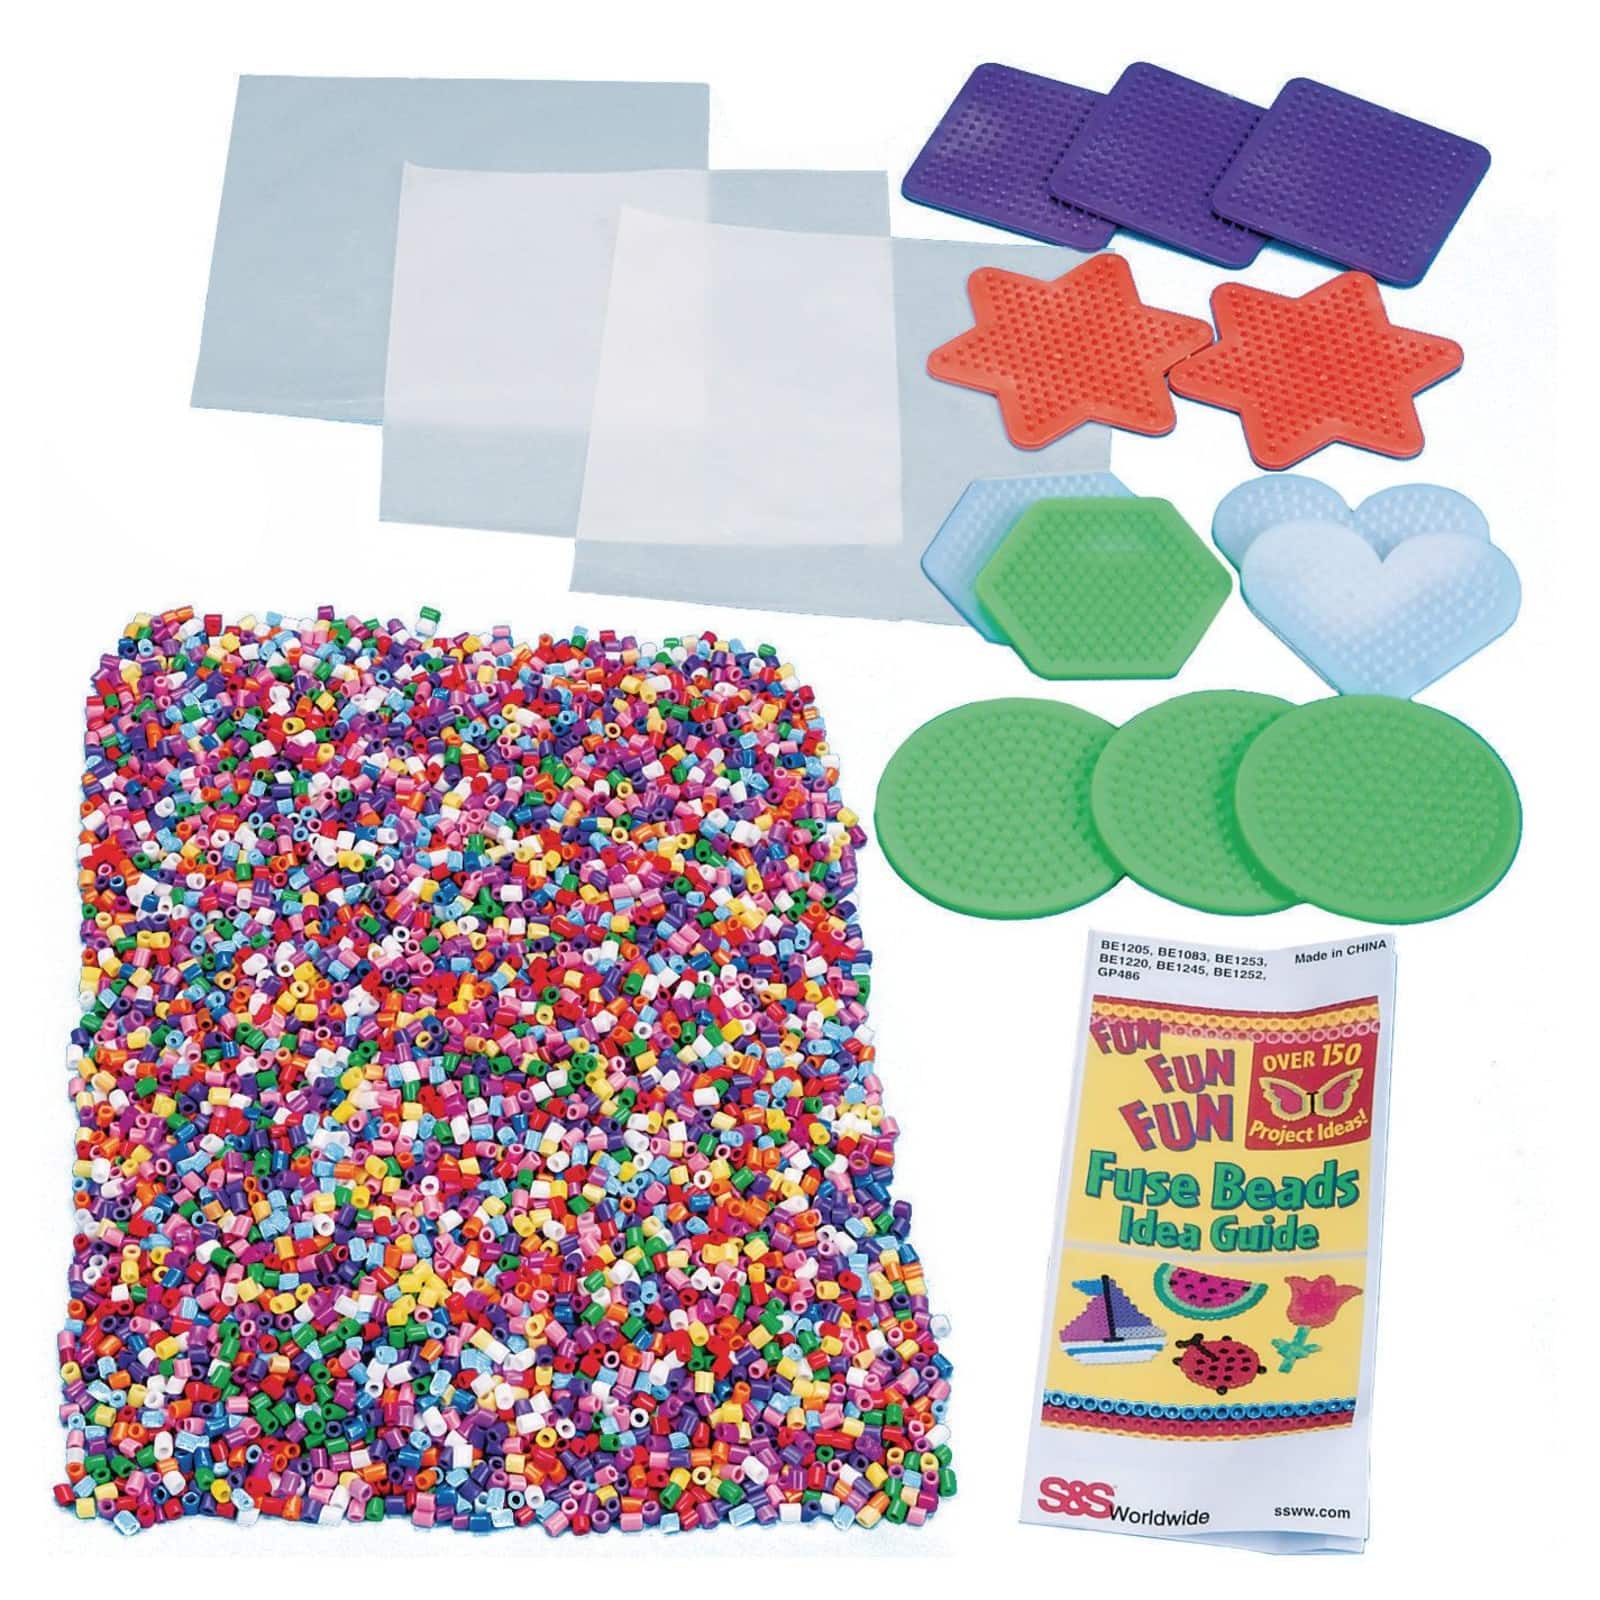 Buy Color Splash!® Mandala Fuse Bead Easy Pack at S&S Worldwide